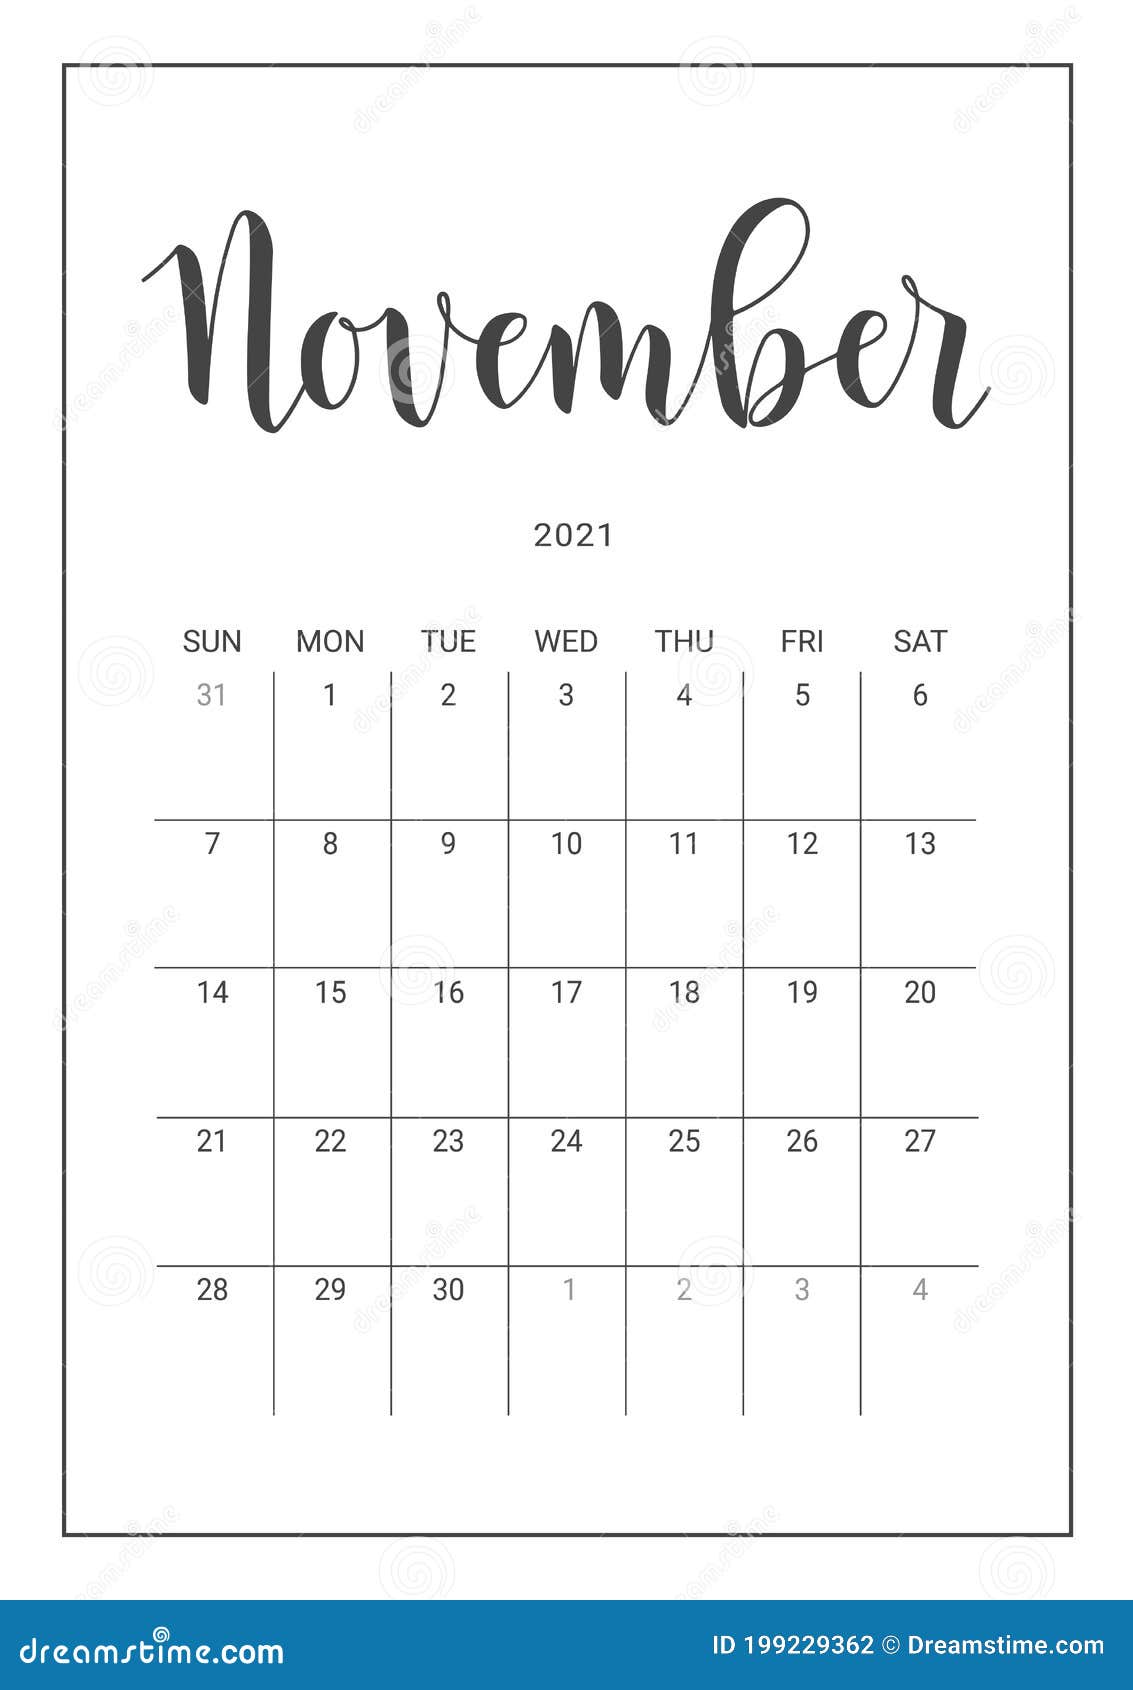 Nov 2021 kalender